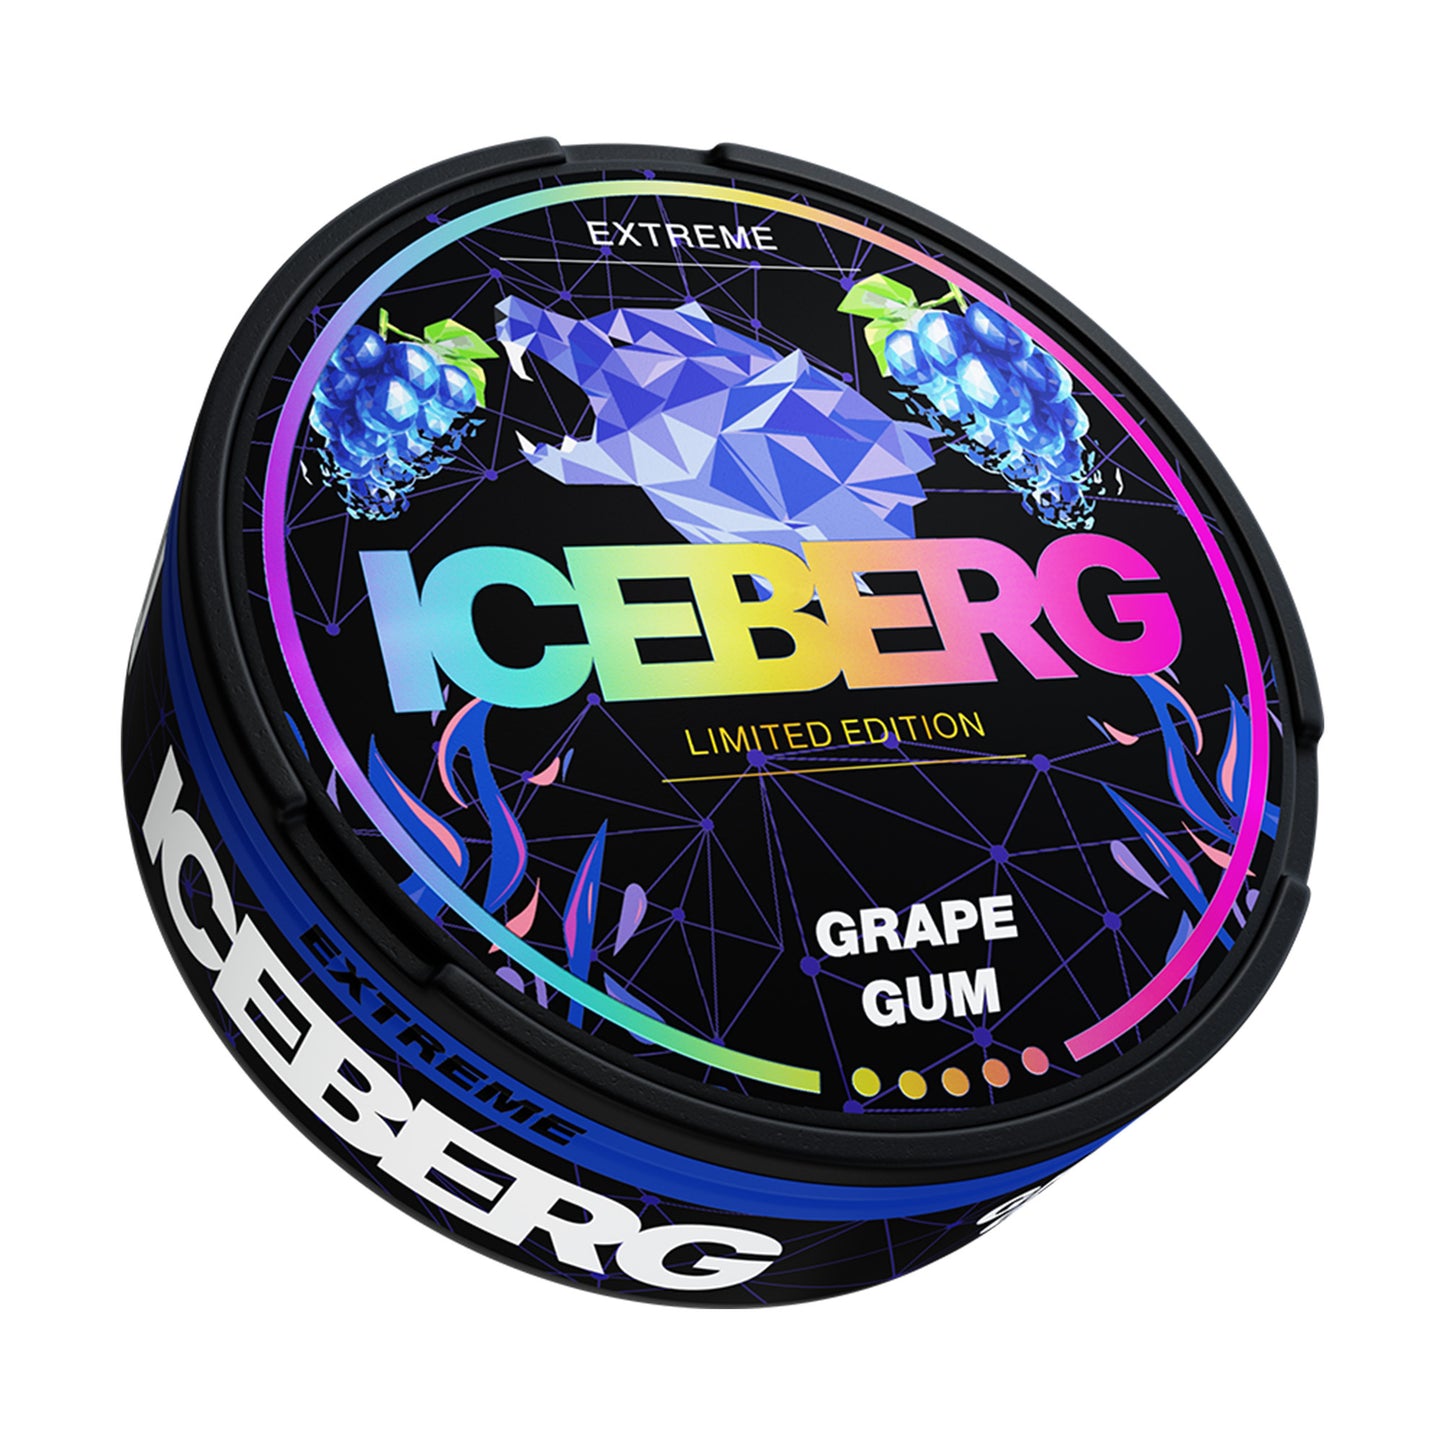 Iceberg Grape Gum - 50mg